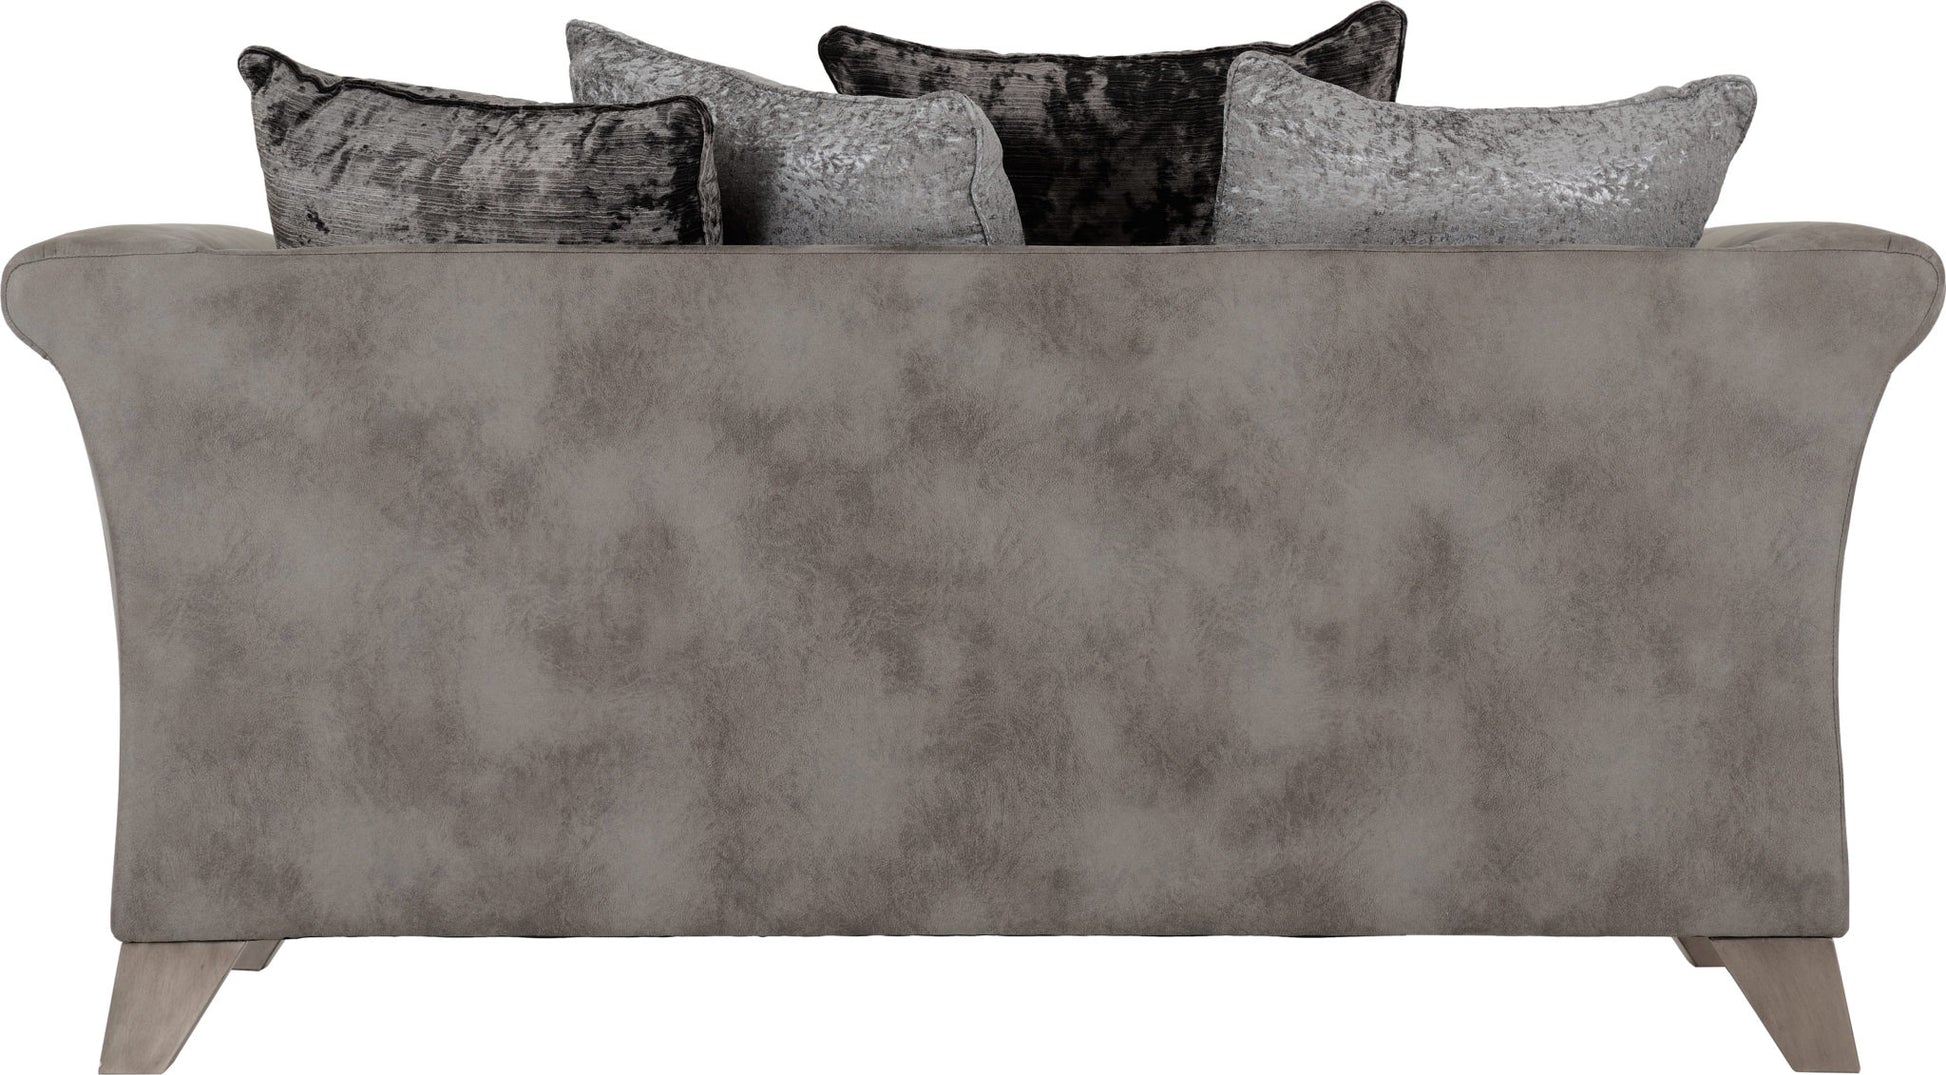 Grace 2 Seater Sofa - Silver/Grey Fabric